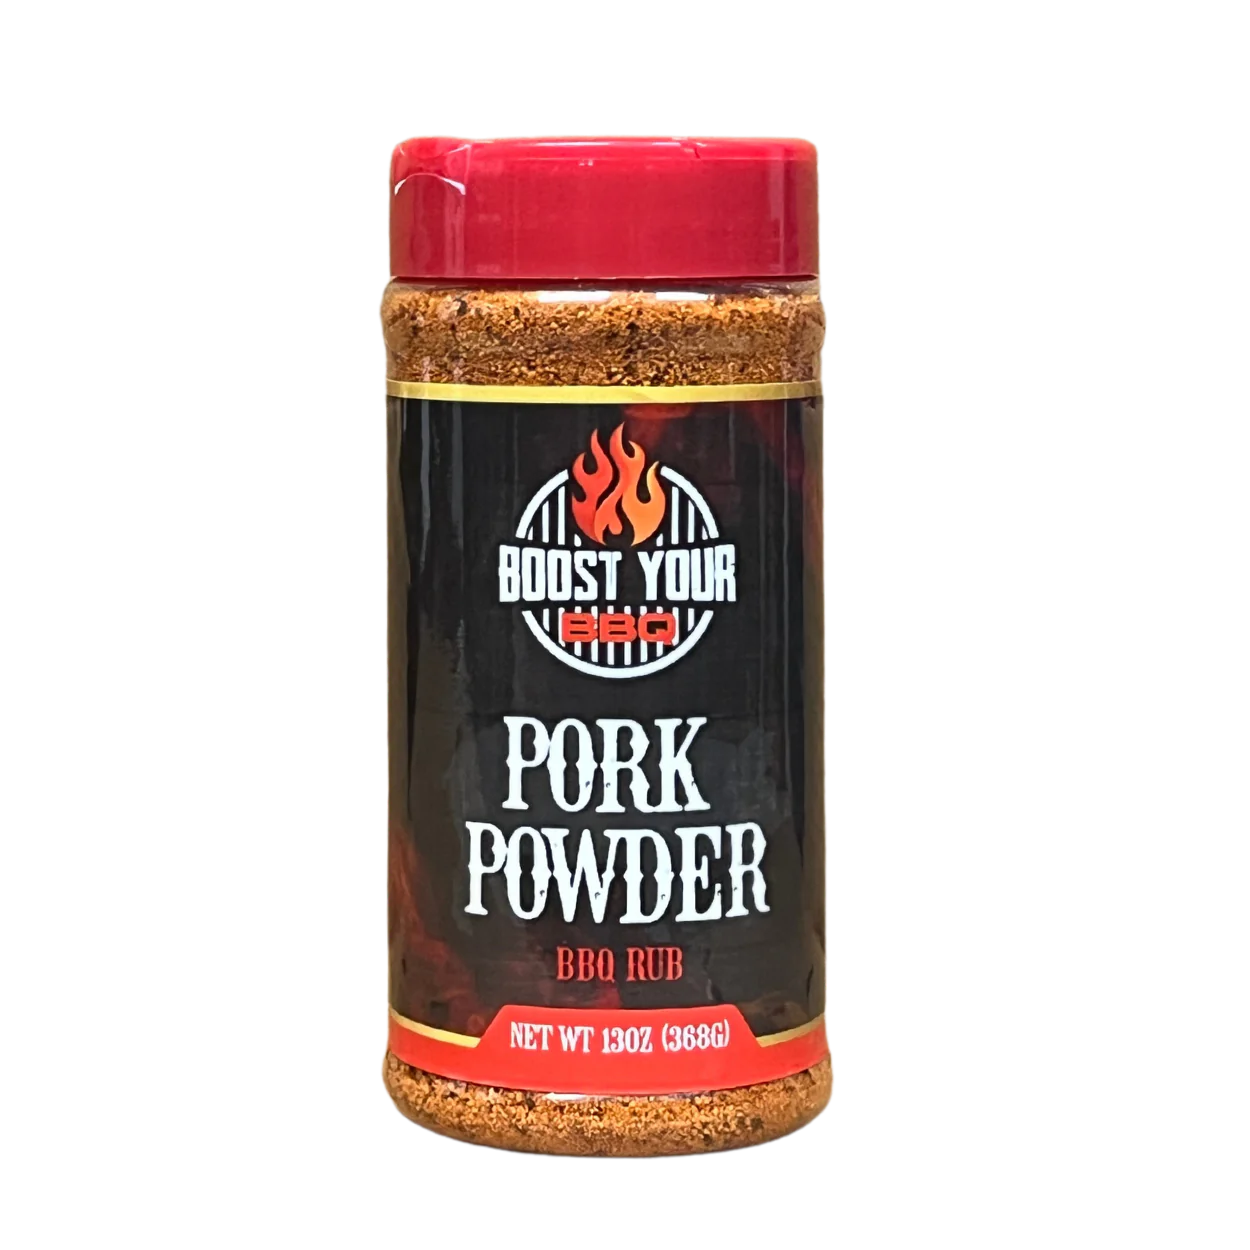 Boost your BBQ – Pork Powder